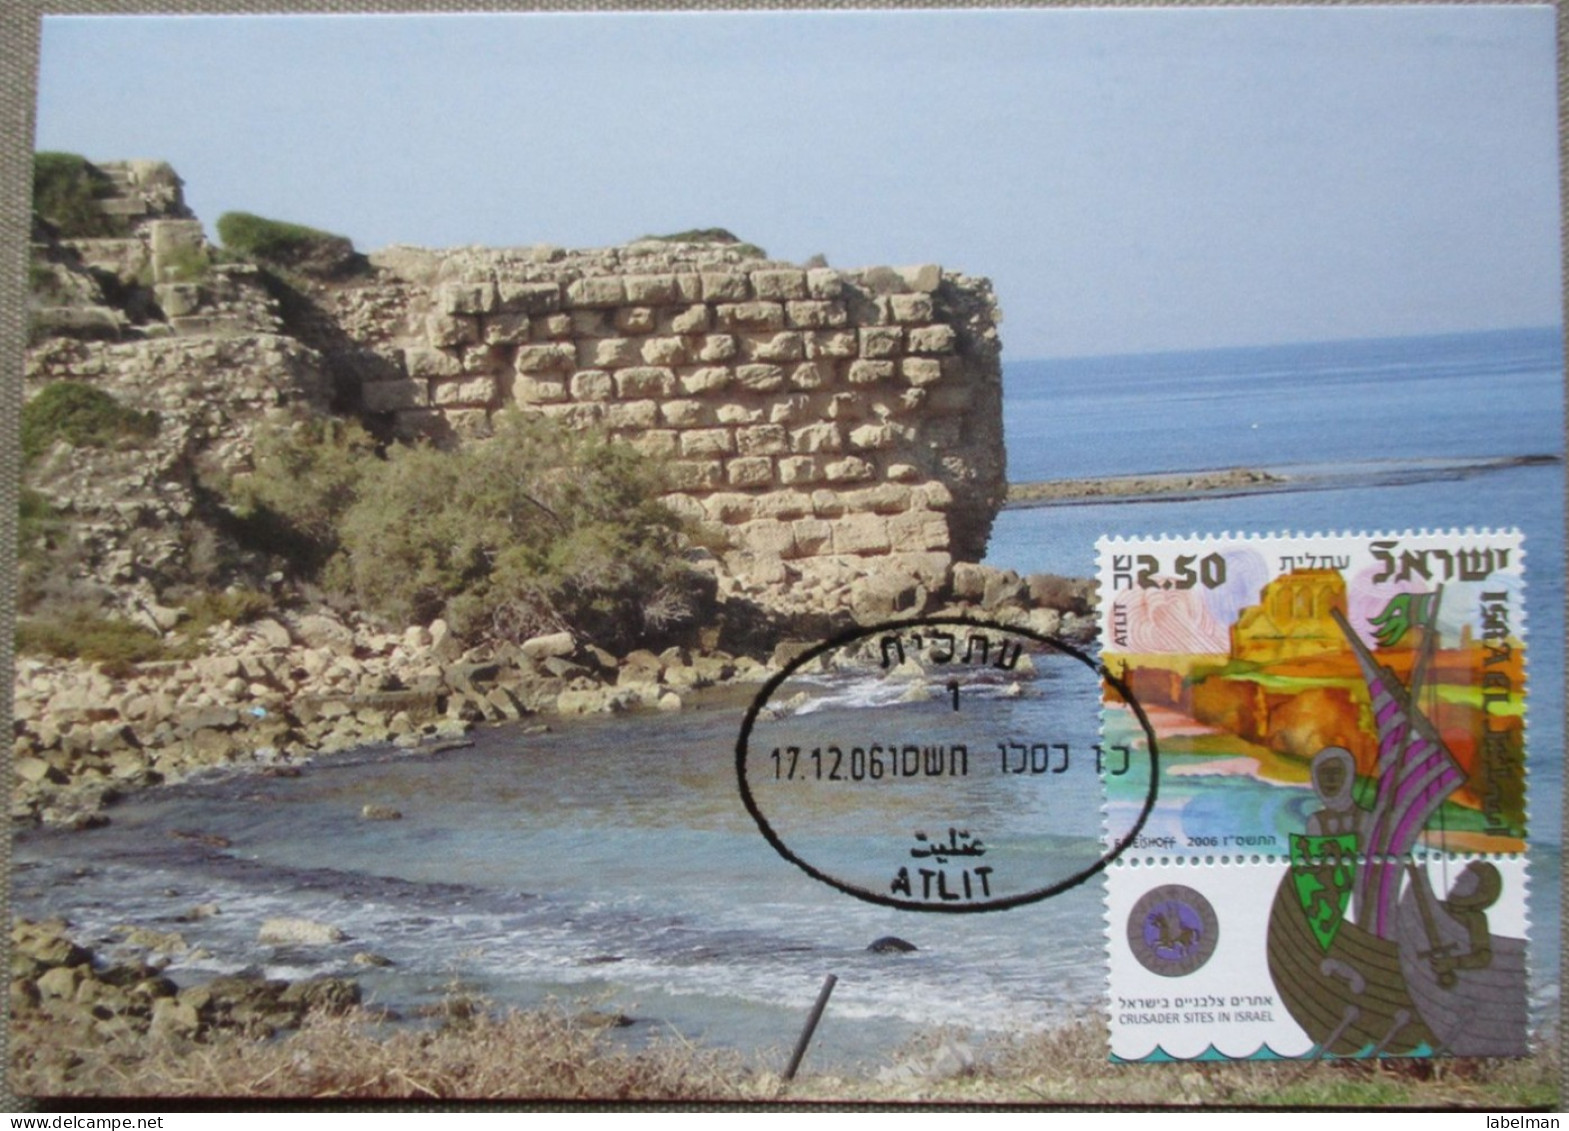 ISRAEL 2006 MAXIMUM CARD POSTCARD ATLIT FORTRESS FIRST DAY OF ISSUE CARTOLINA CARTE POSTALE POSTKARTE CARTOLINA - Maximumkarten